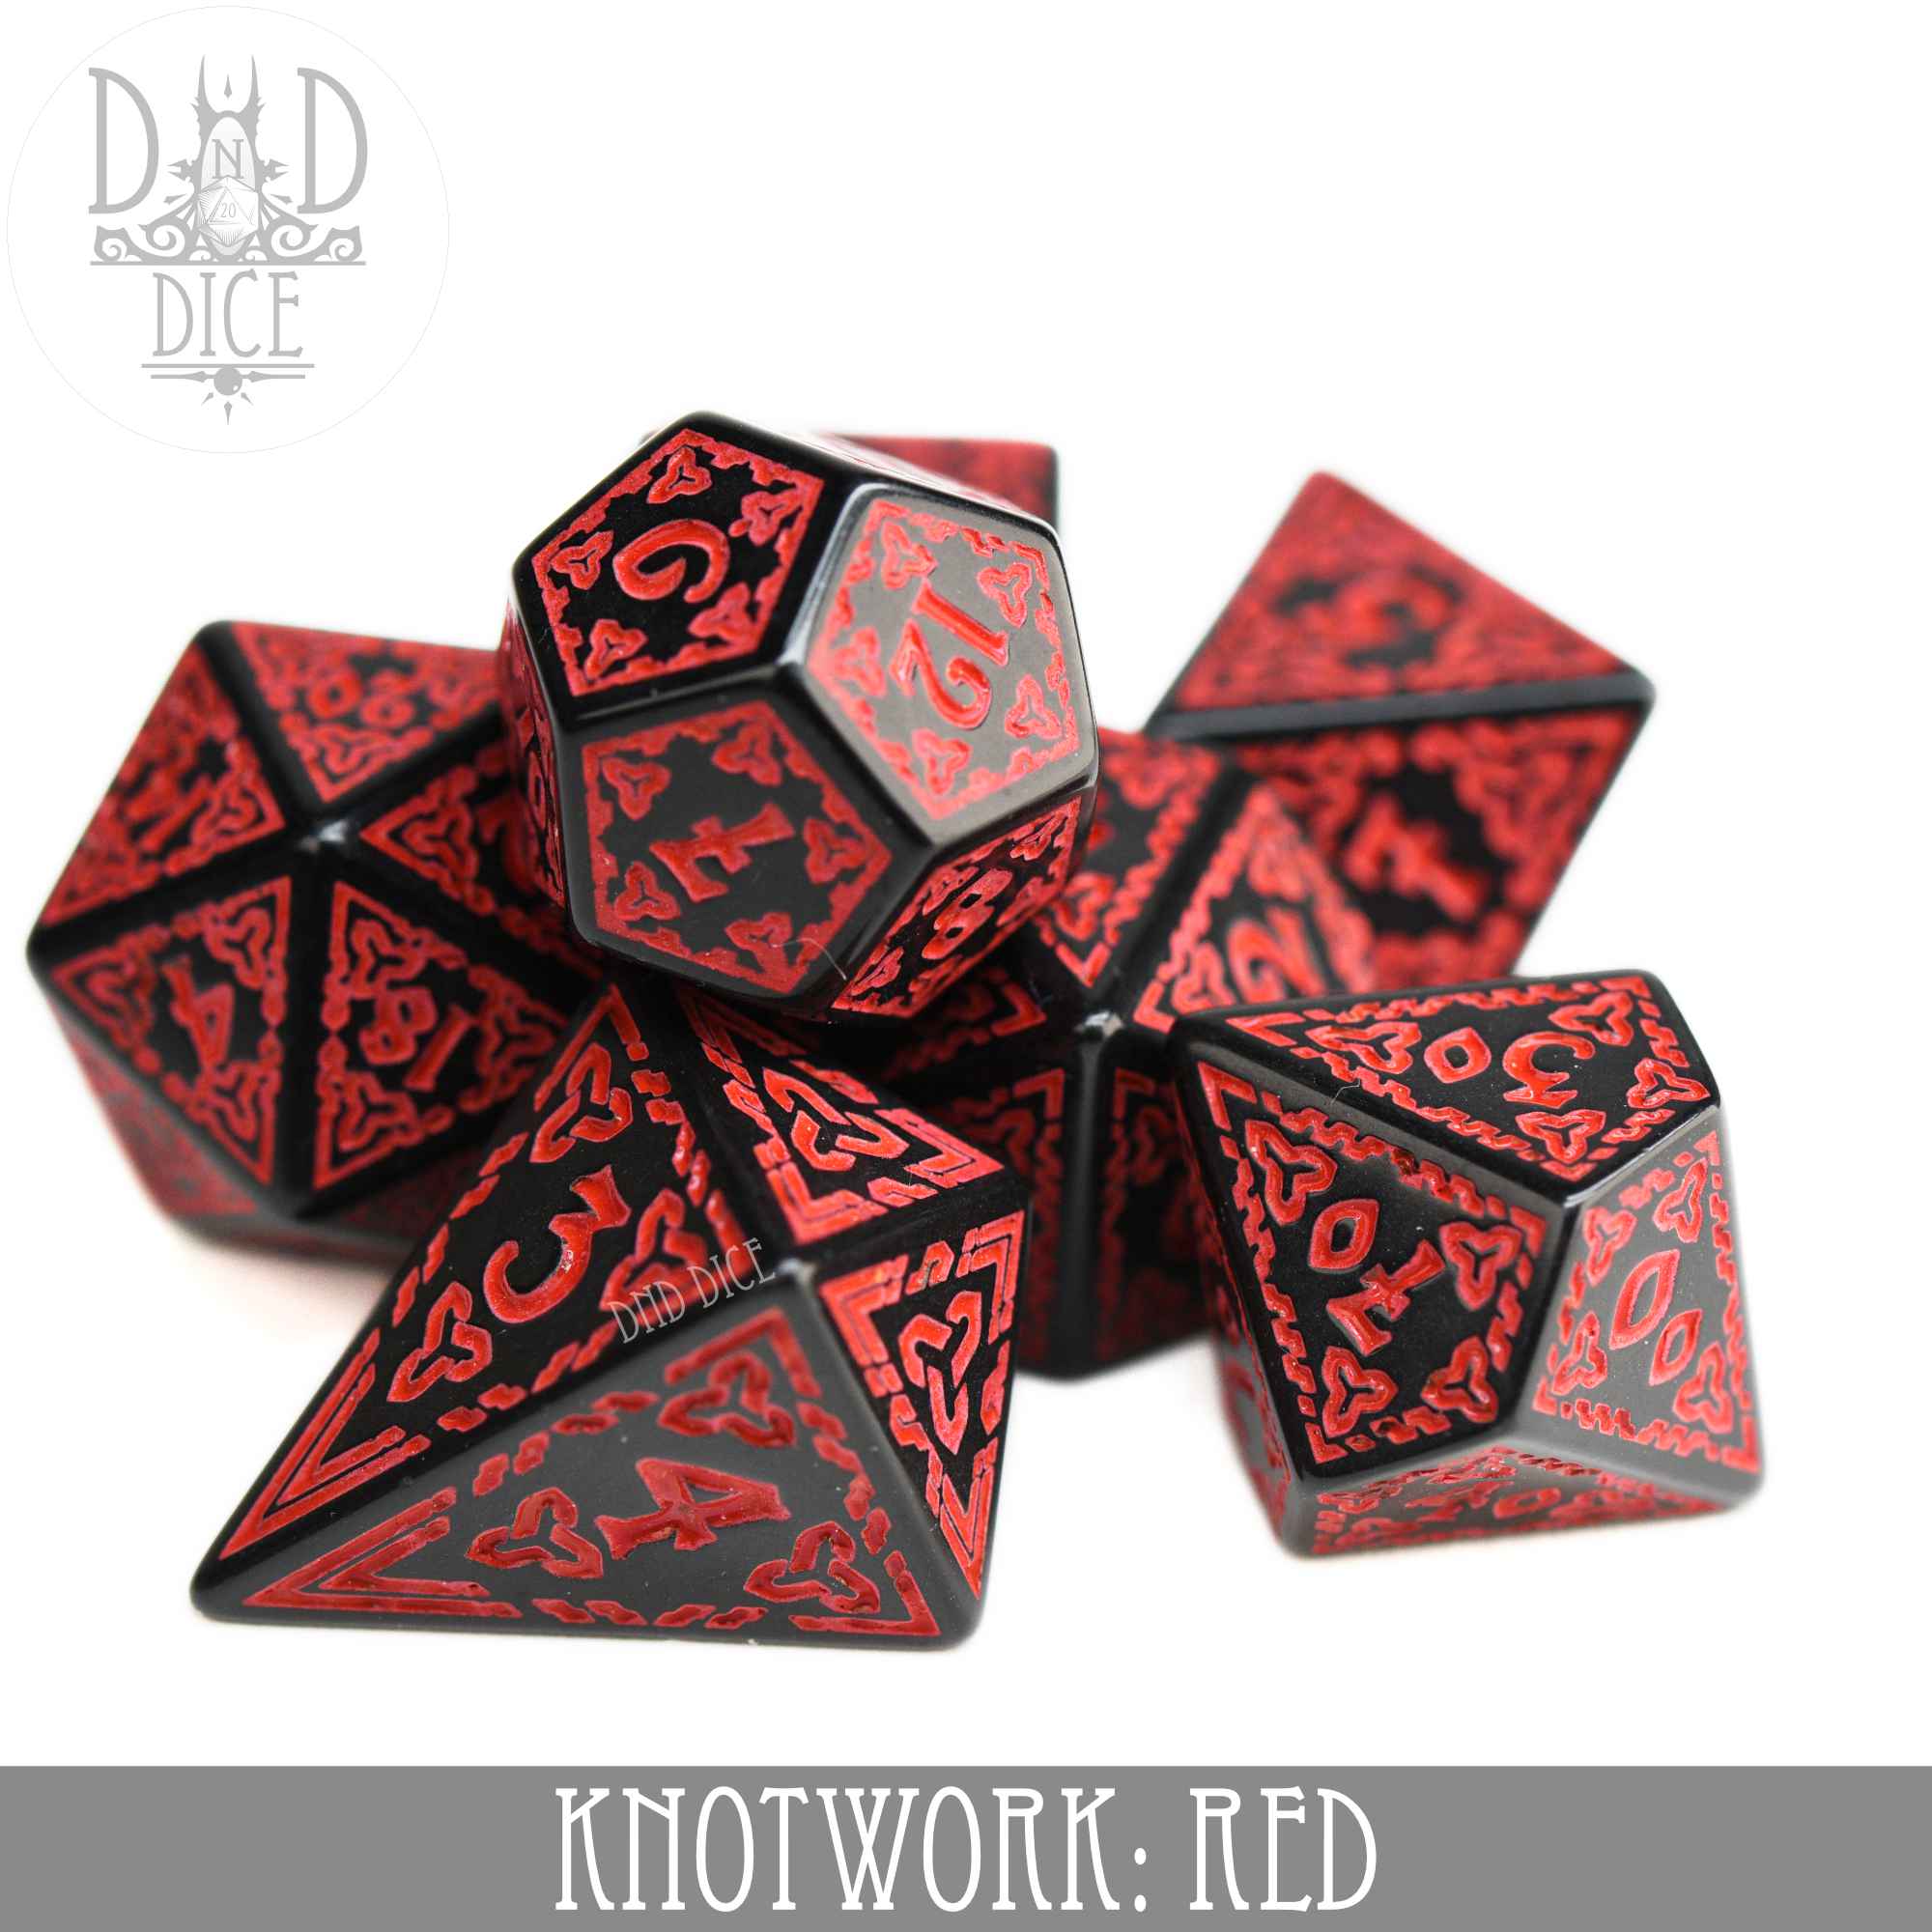 Knotwork: Red Dice Set